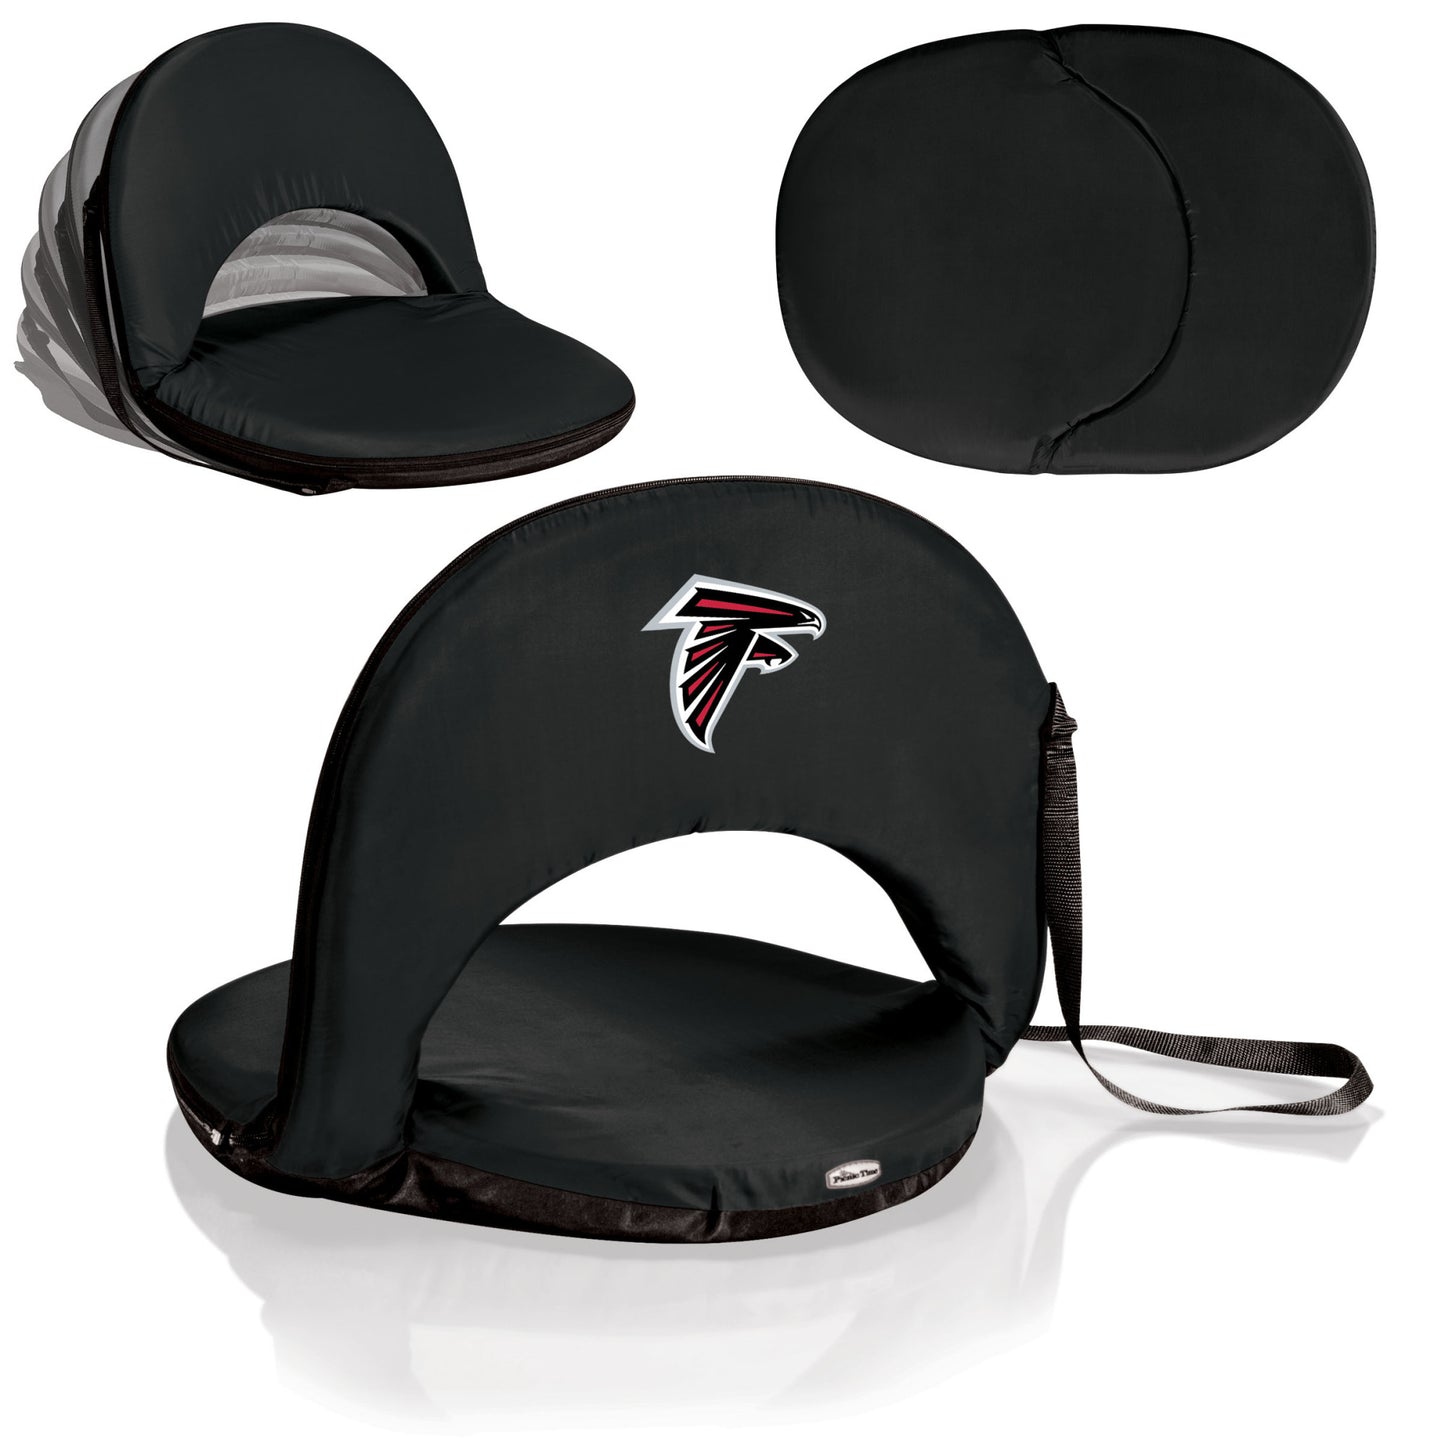 Atlanta Falcons - Oniva Portable Reclining Seat, (Black) by Picnic Time